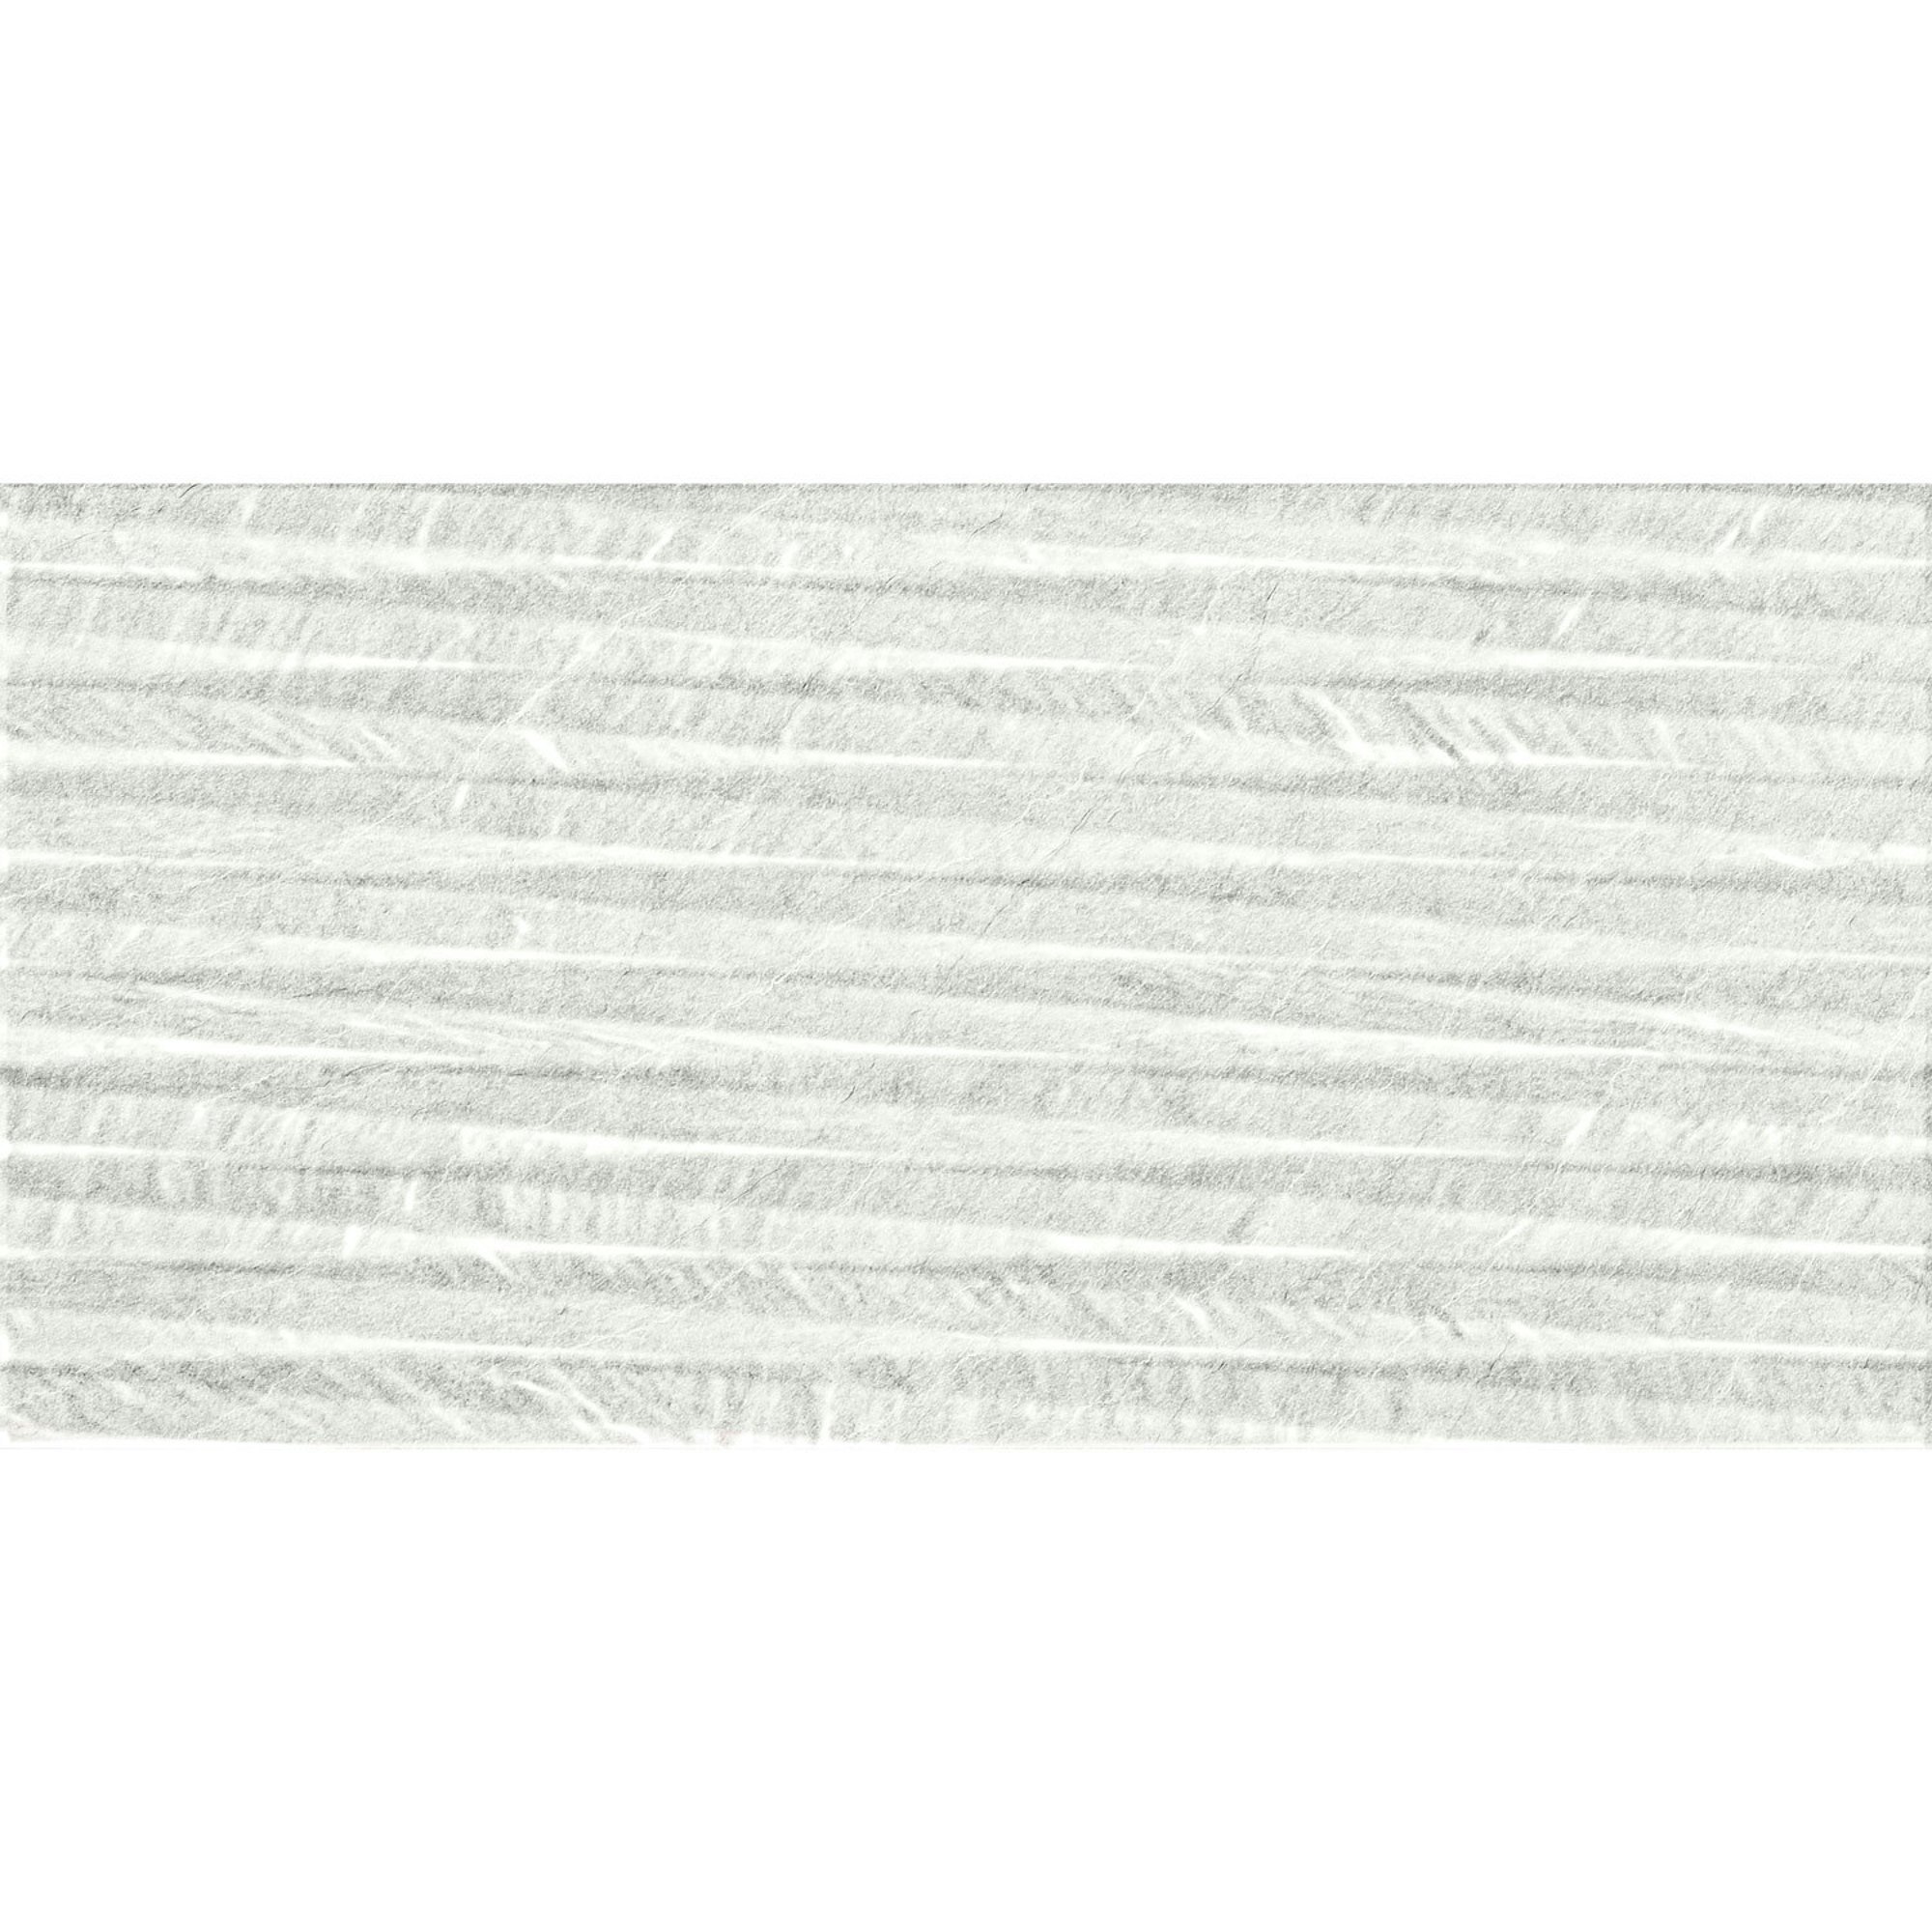 Vinaros Moon White Wall Textured Decor Tile Clearance